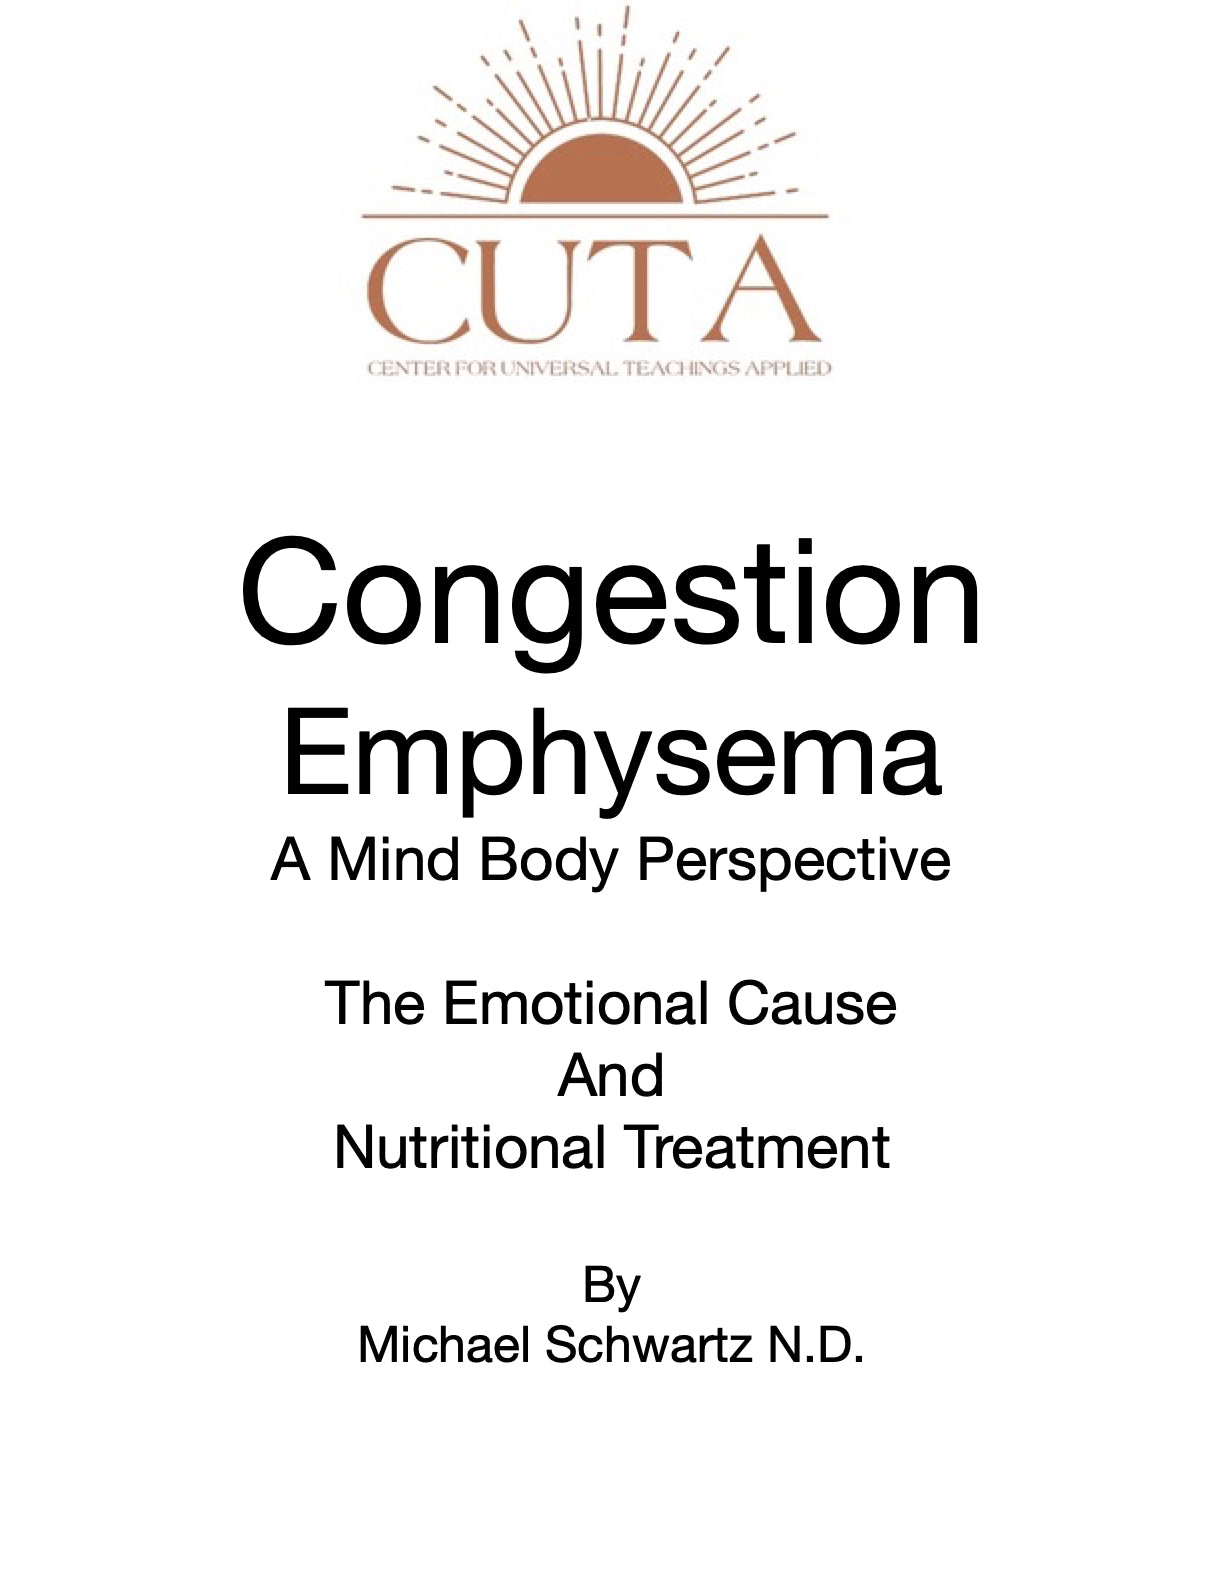 Congestion Emphysema